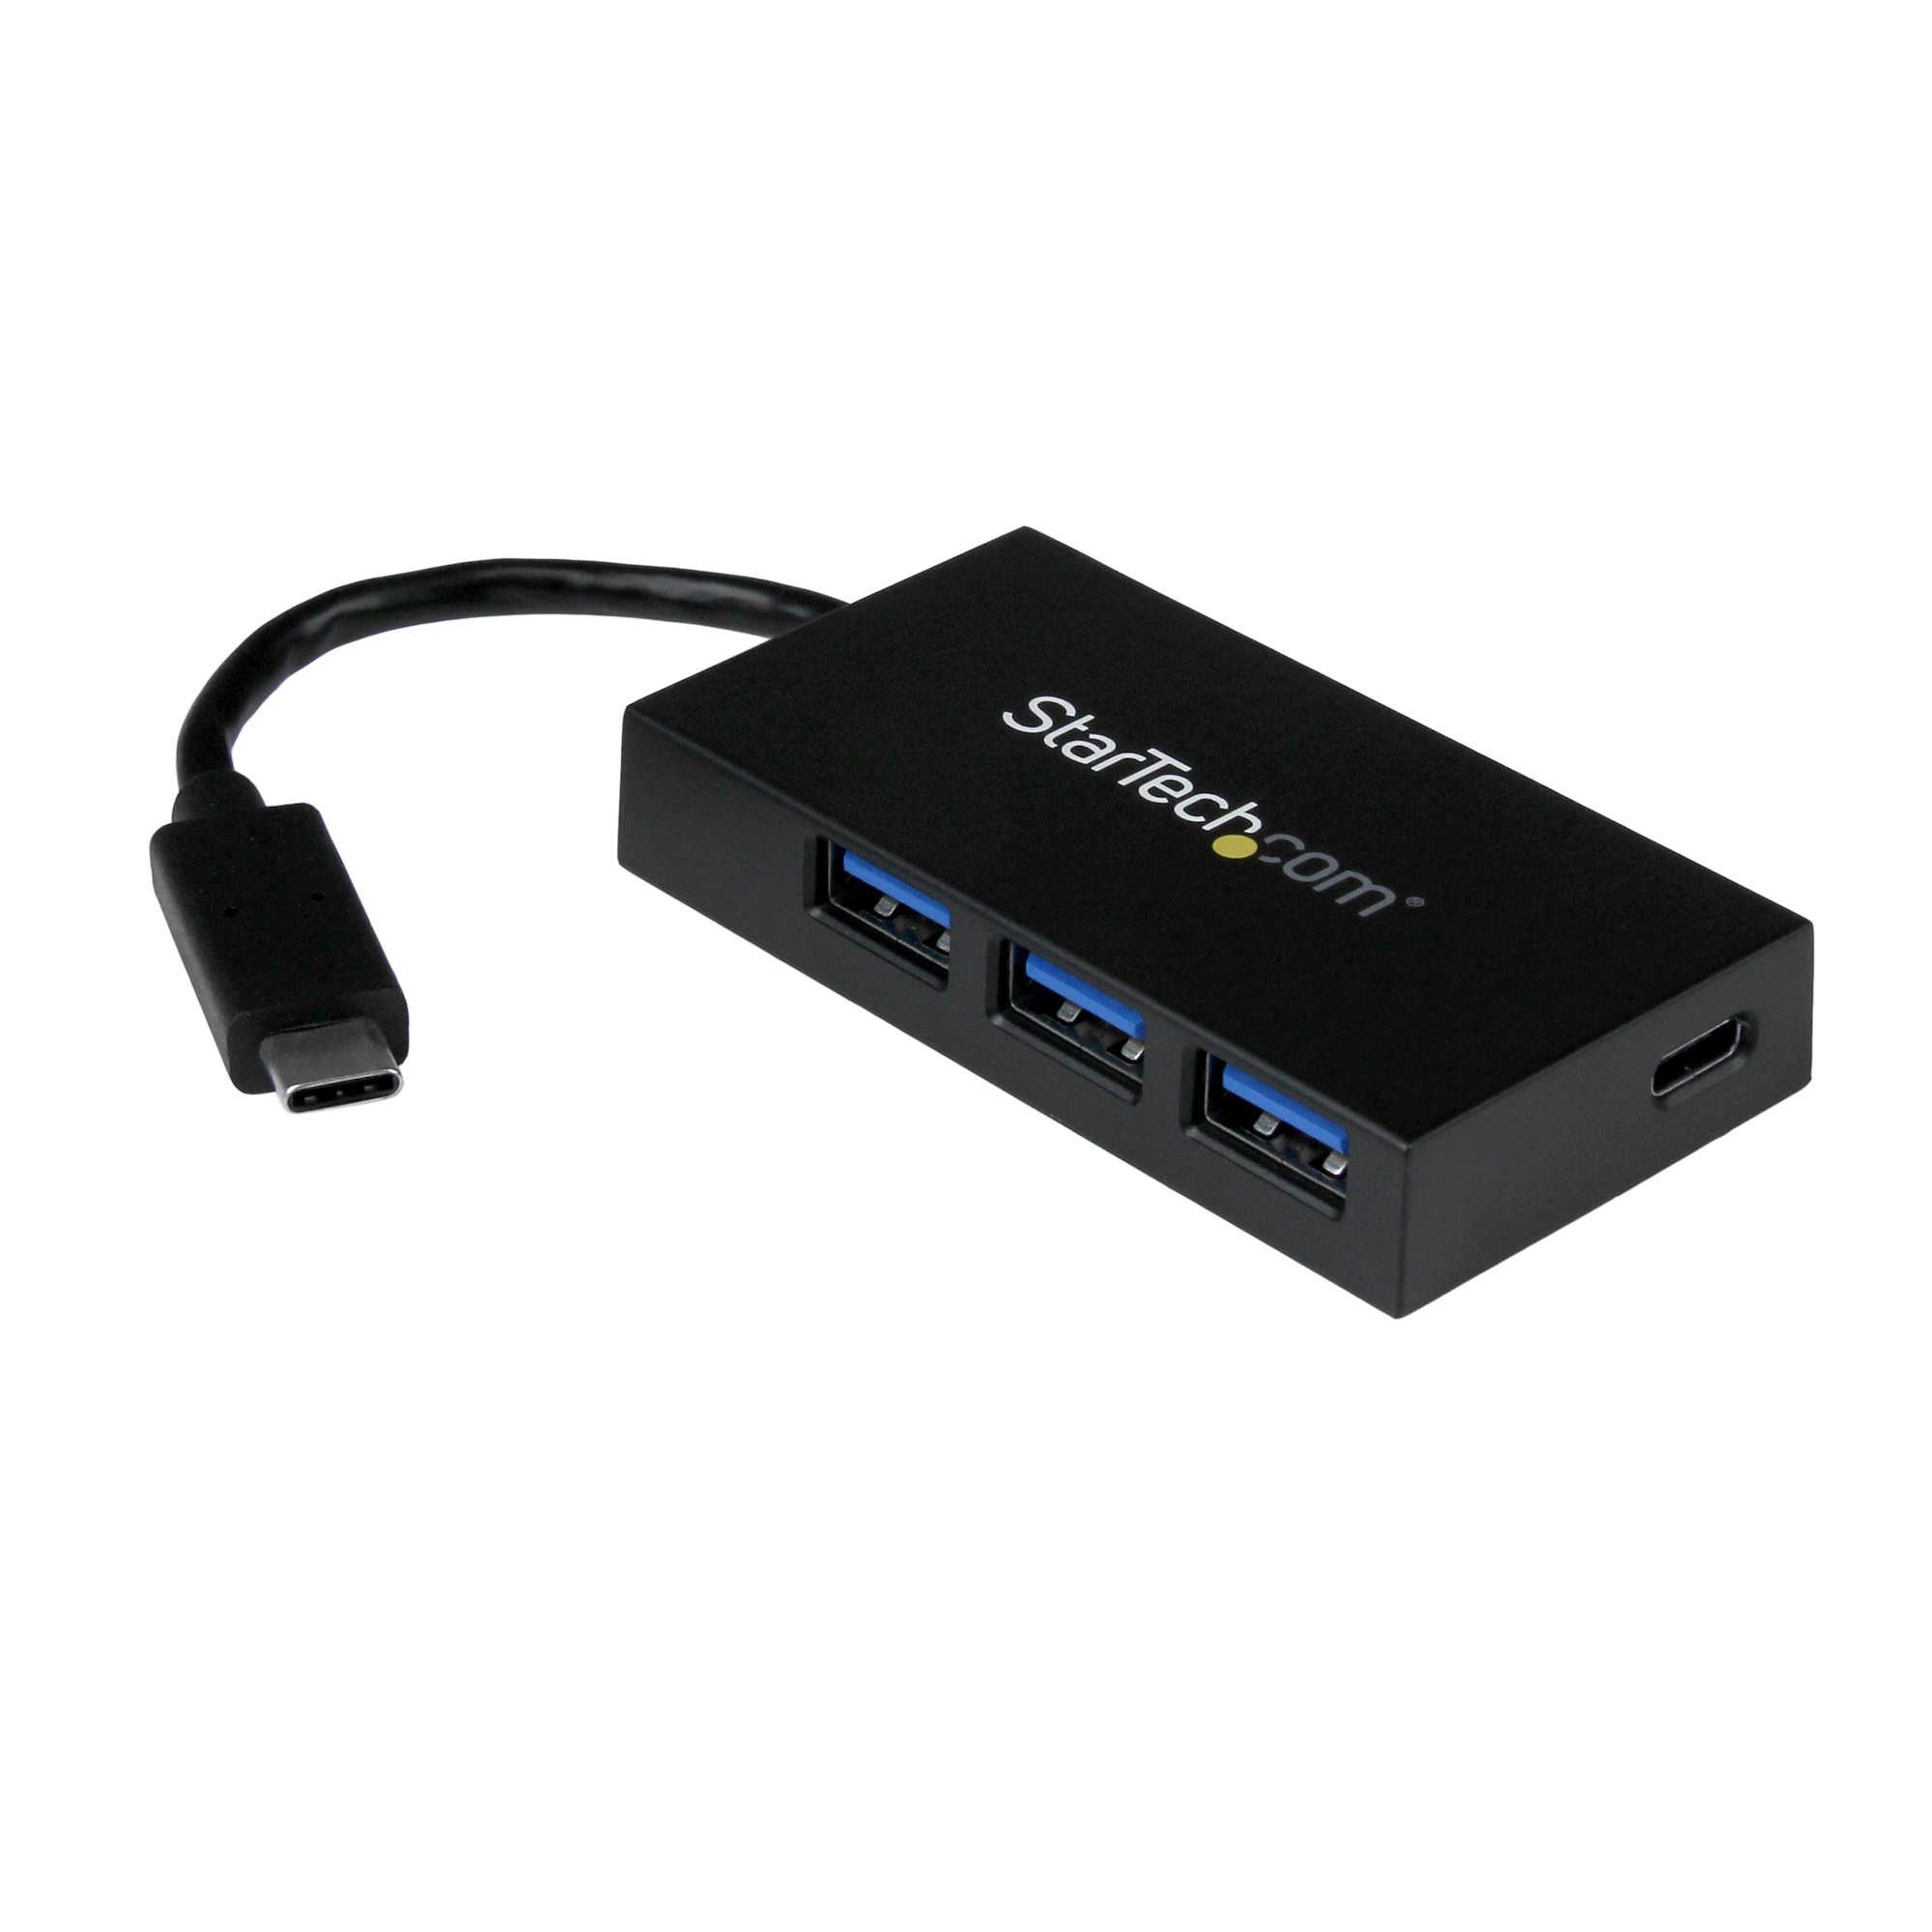 Ramkoers Taiko buik pellet Hub USB C 4 Port - C to C & A - USB 3.0 - USB-C Hubs | StarTech.com